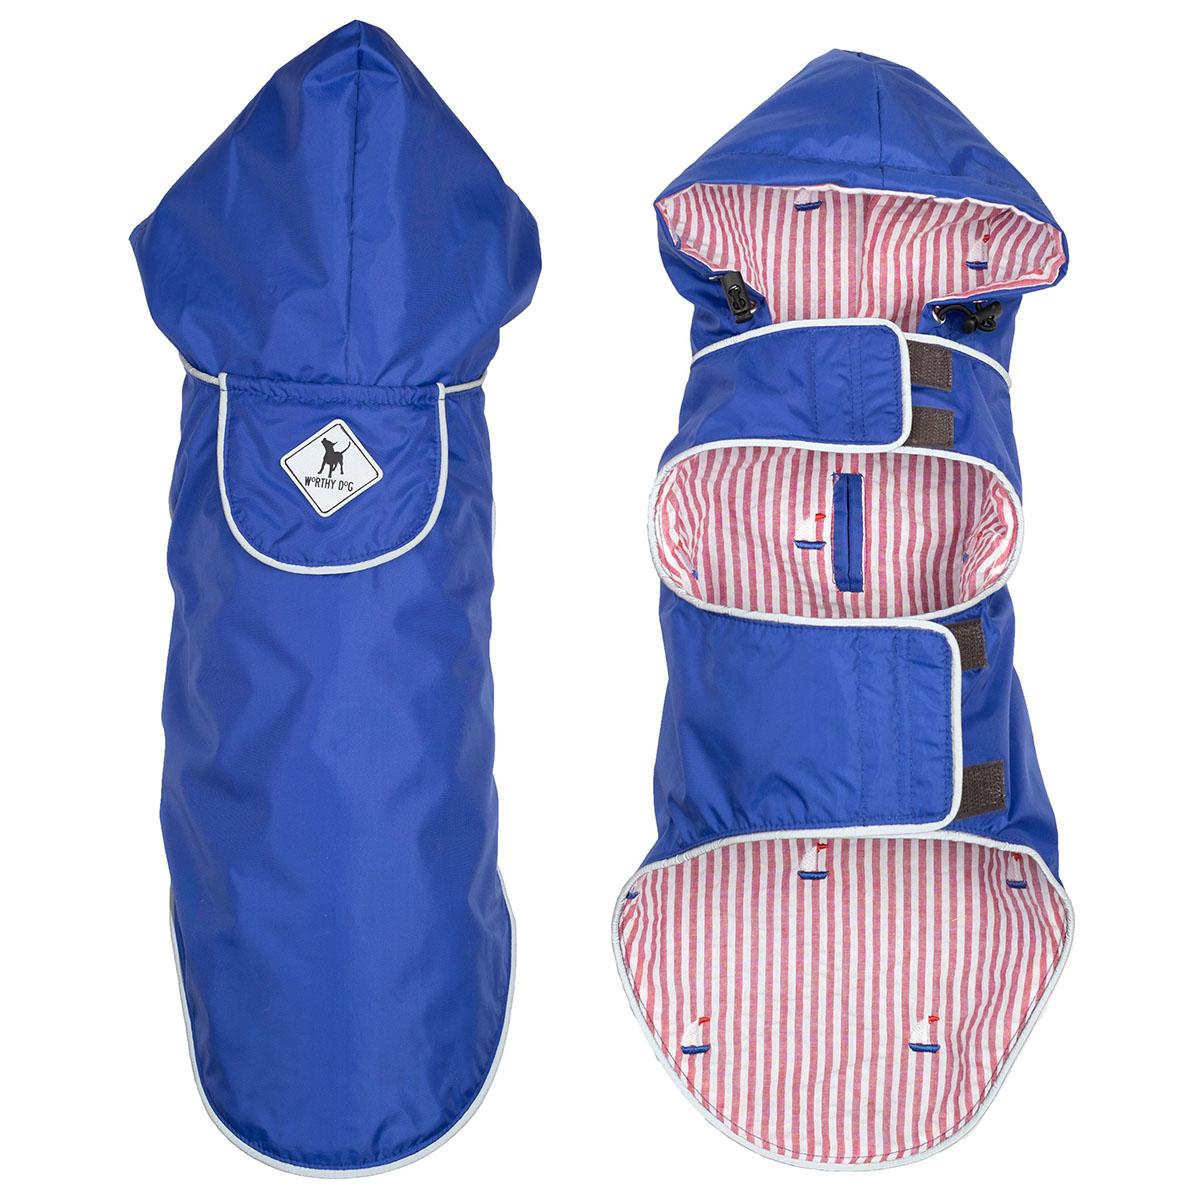 Vintage Seahawks Apex one Blue rain jacket poncho foldable into hip pouch￼ M